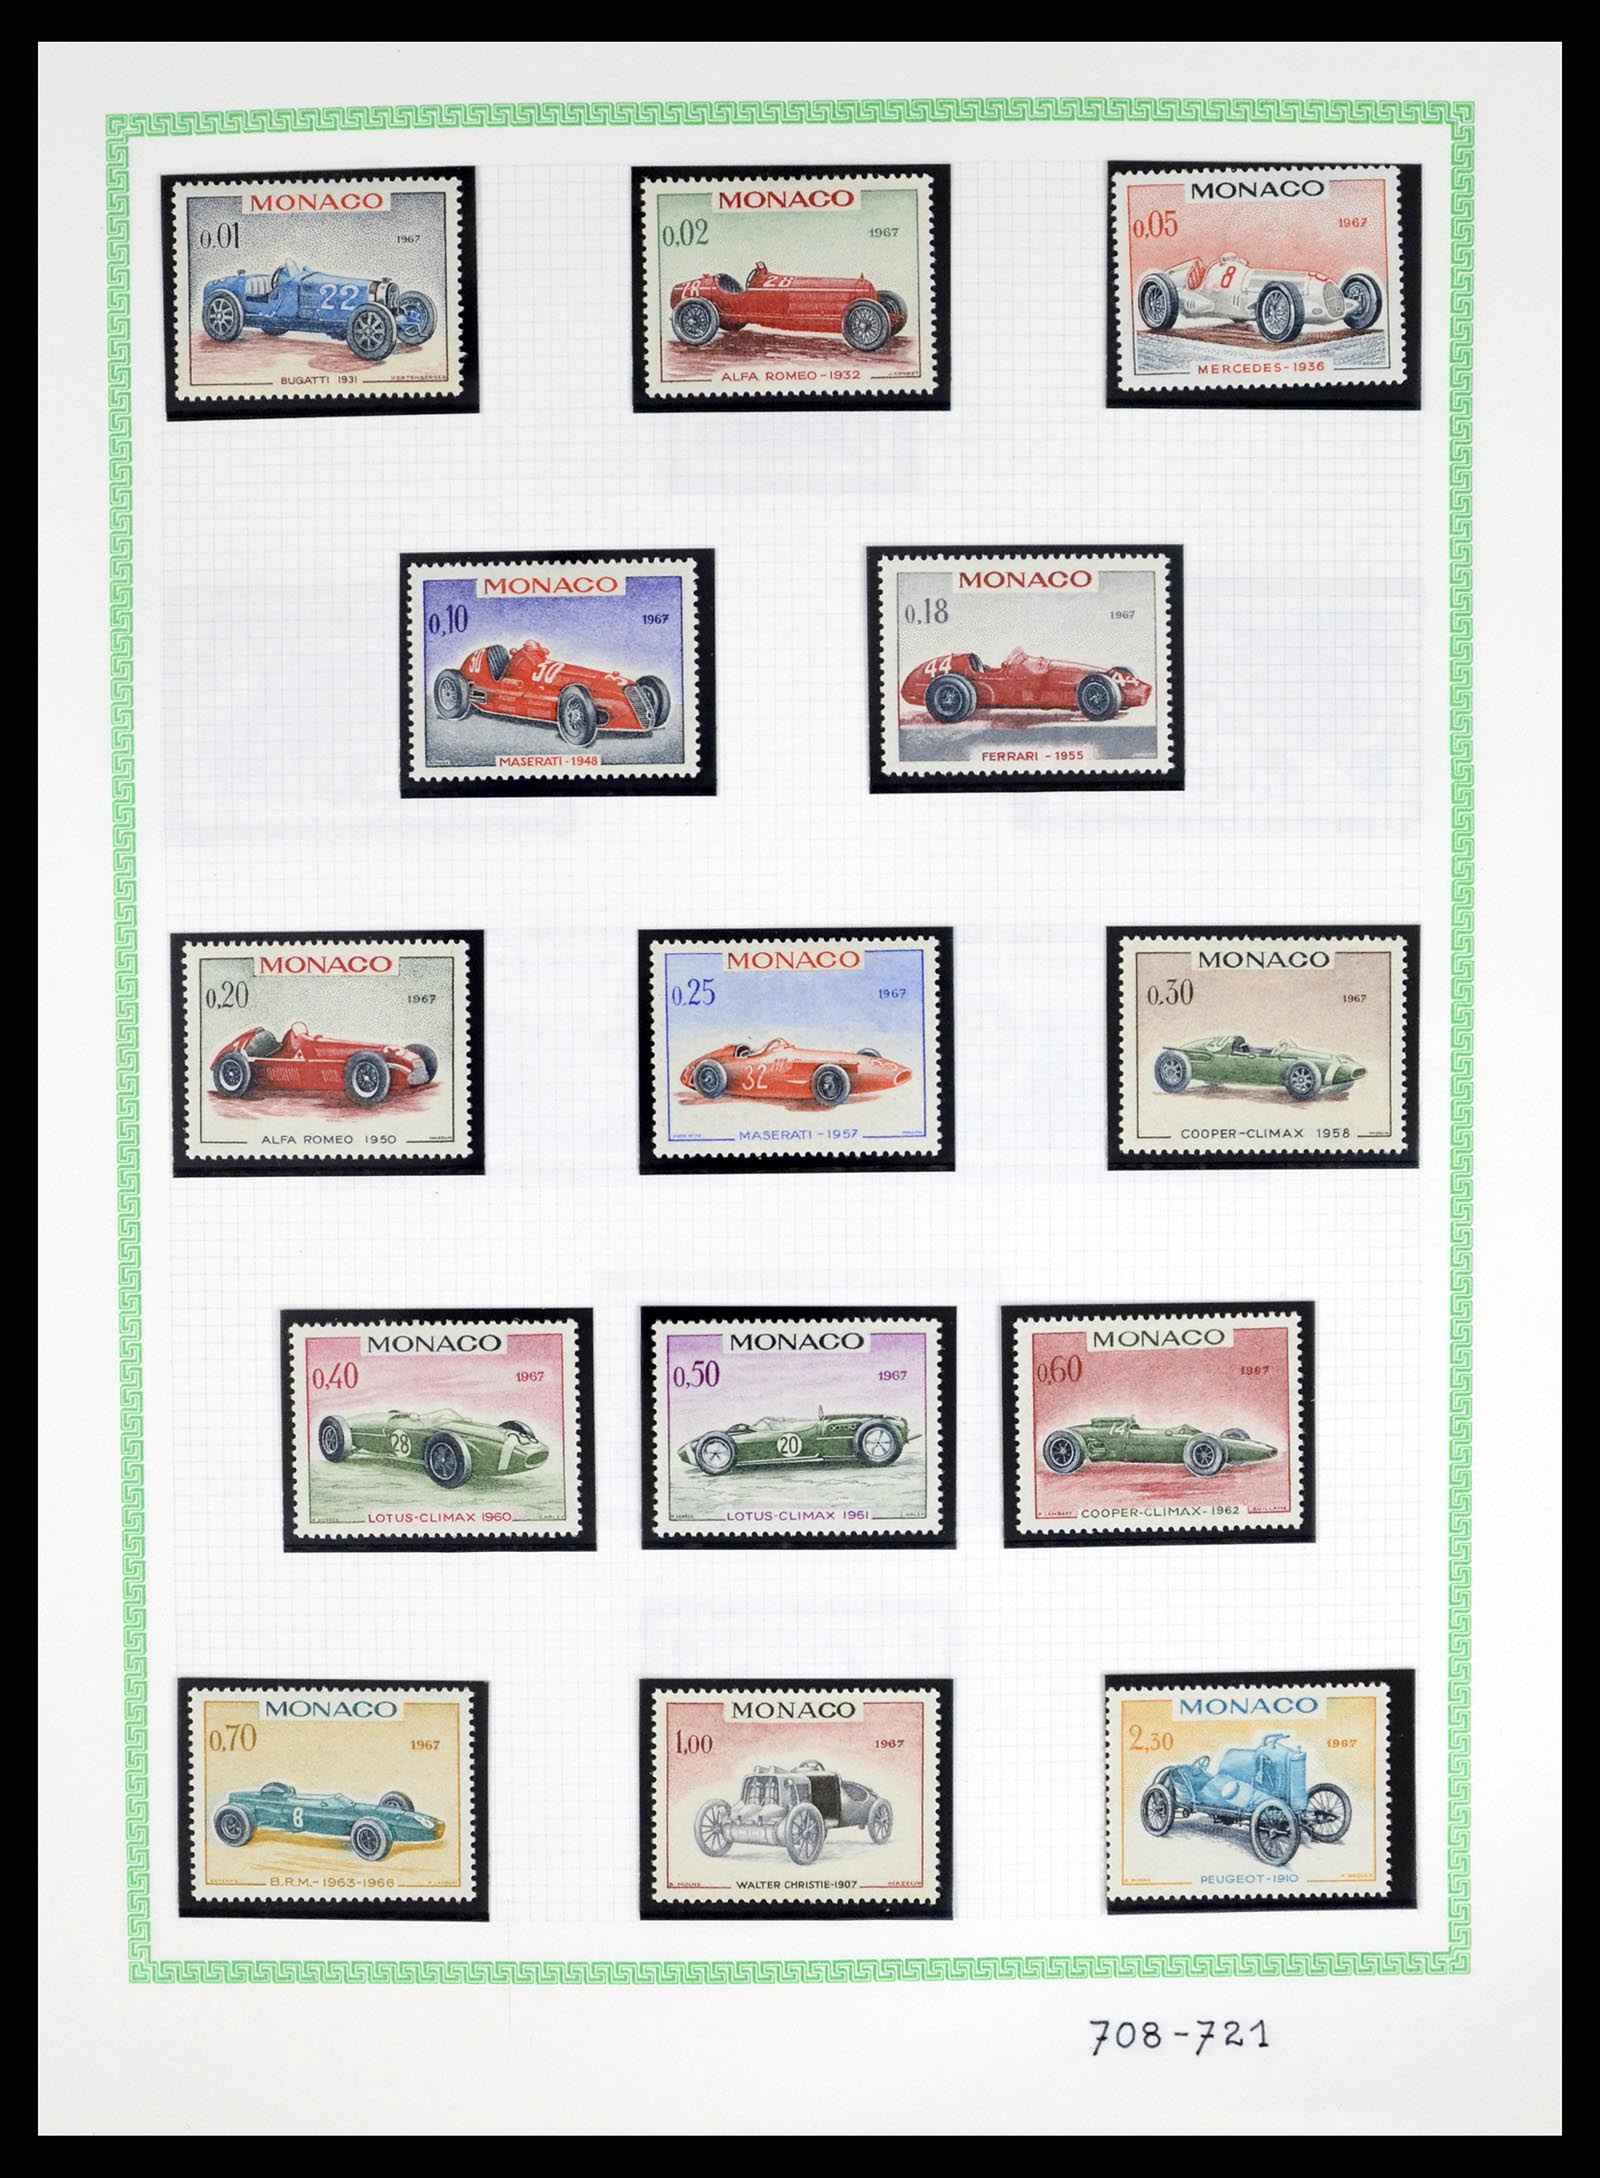 37380 067 - Stamp collection 37380 Monaco 1921-2015.